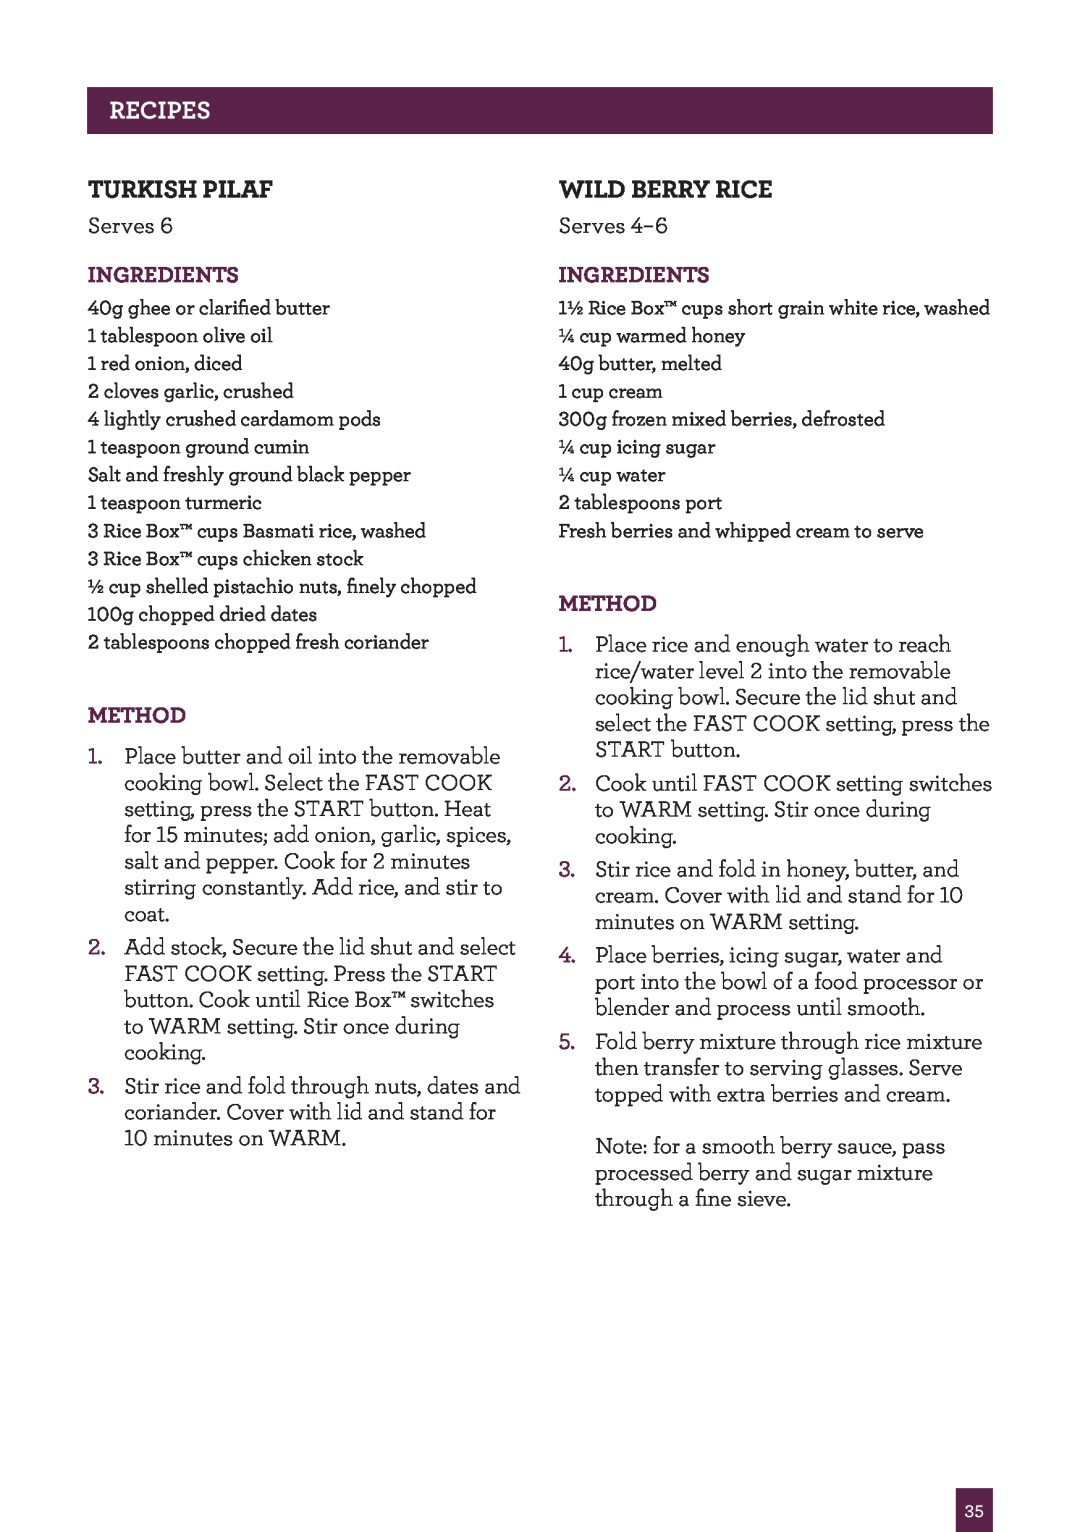 Breville BRC460 brochure Turkish Pilaf, Wild Berry Rice, Recipes, Ingredients, Method 